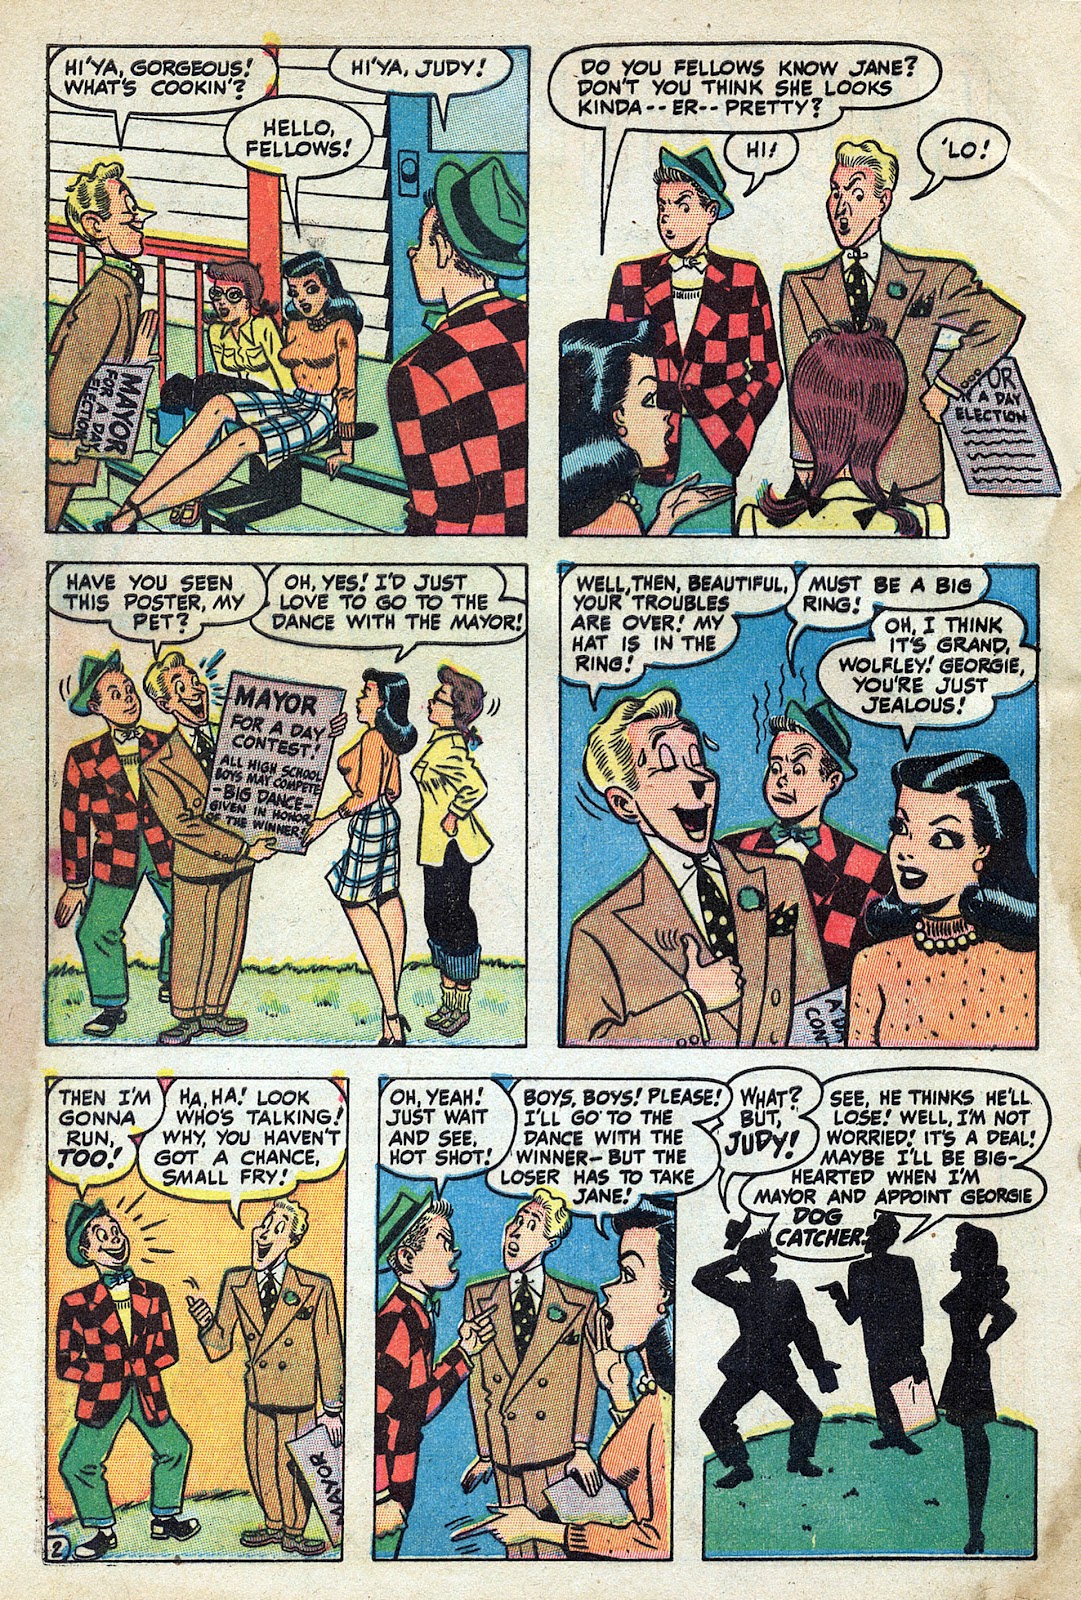 Georgie Comics (1945) issue 16 - Page 4